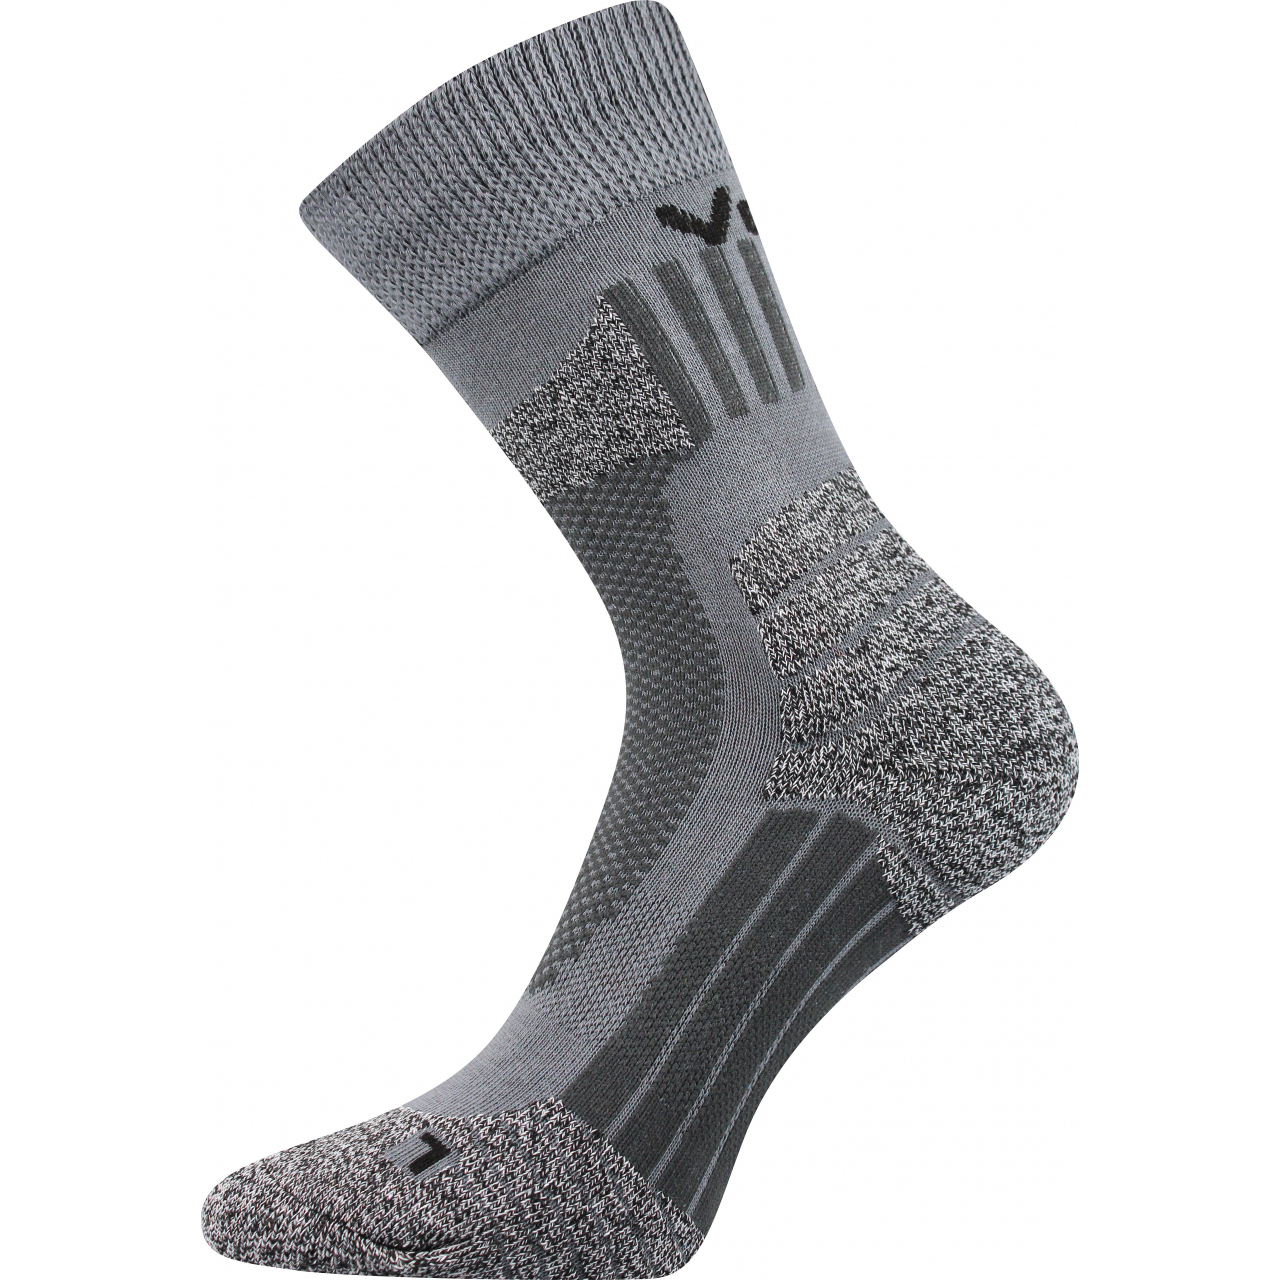 Ponožky unisex trekové Voxx Egoist L + P - šedé, 47-50